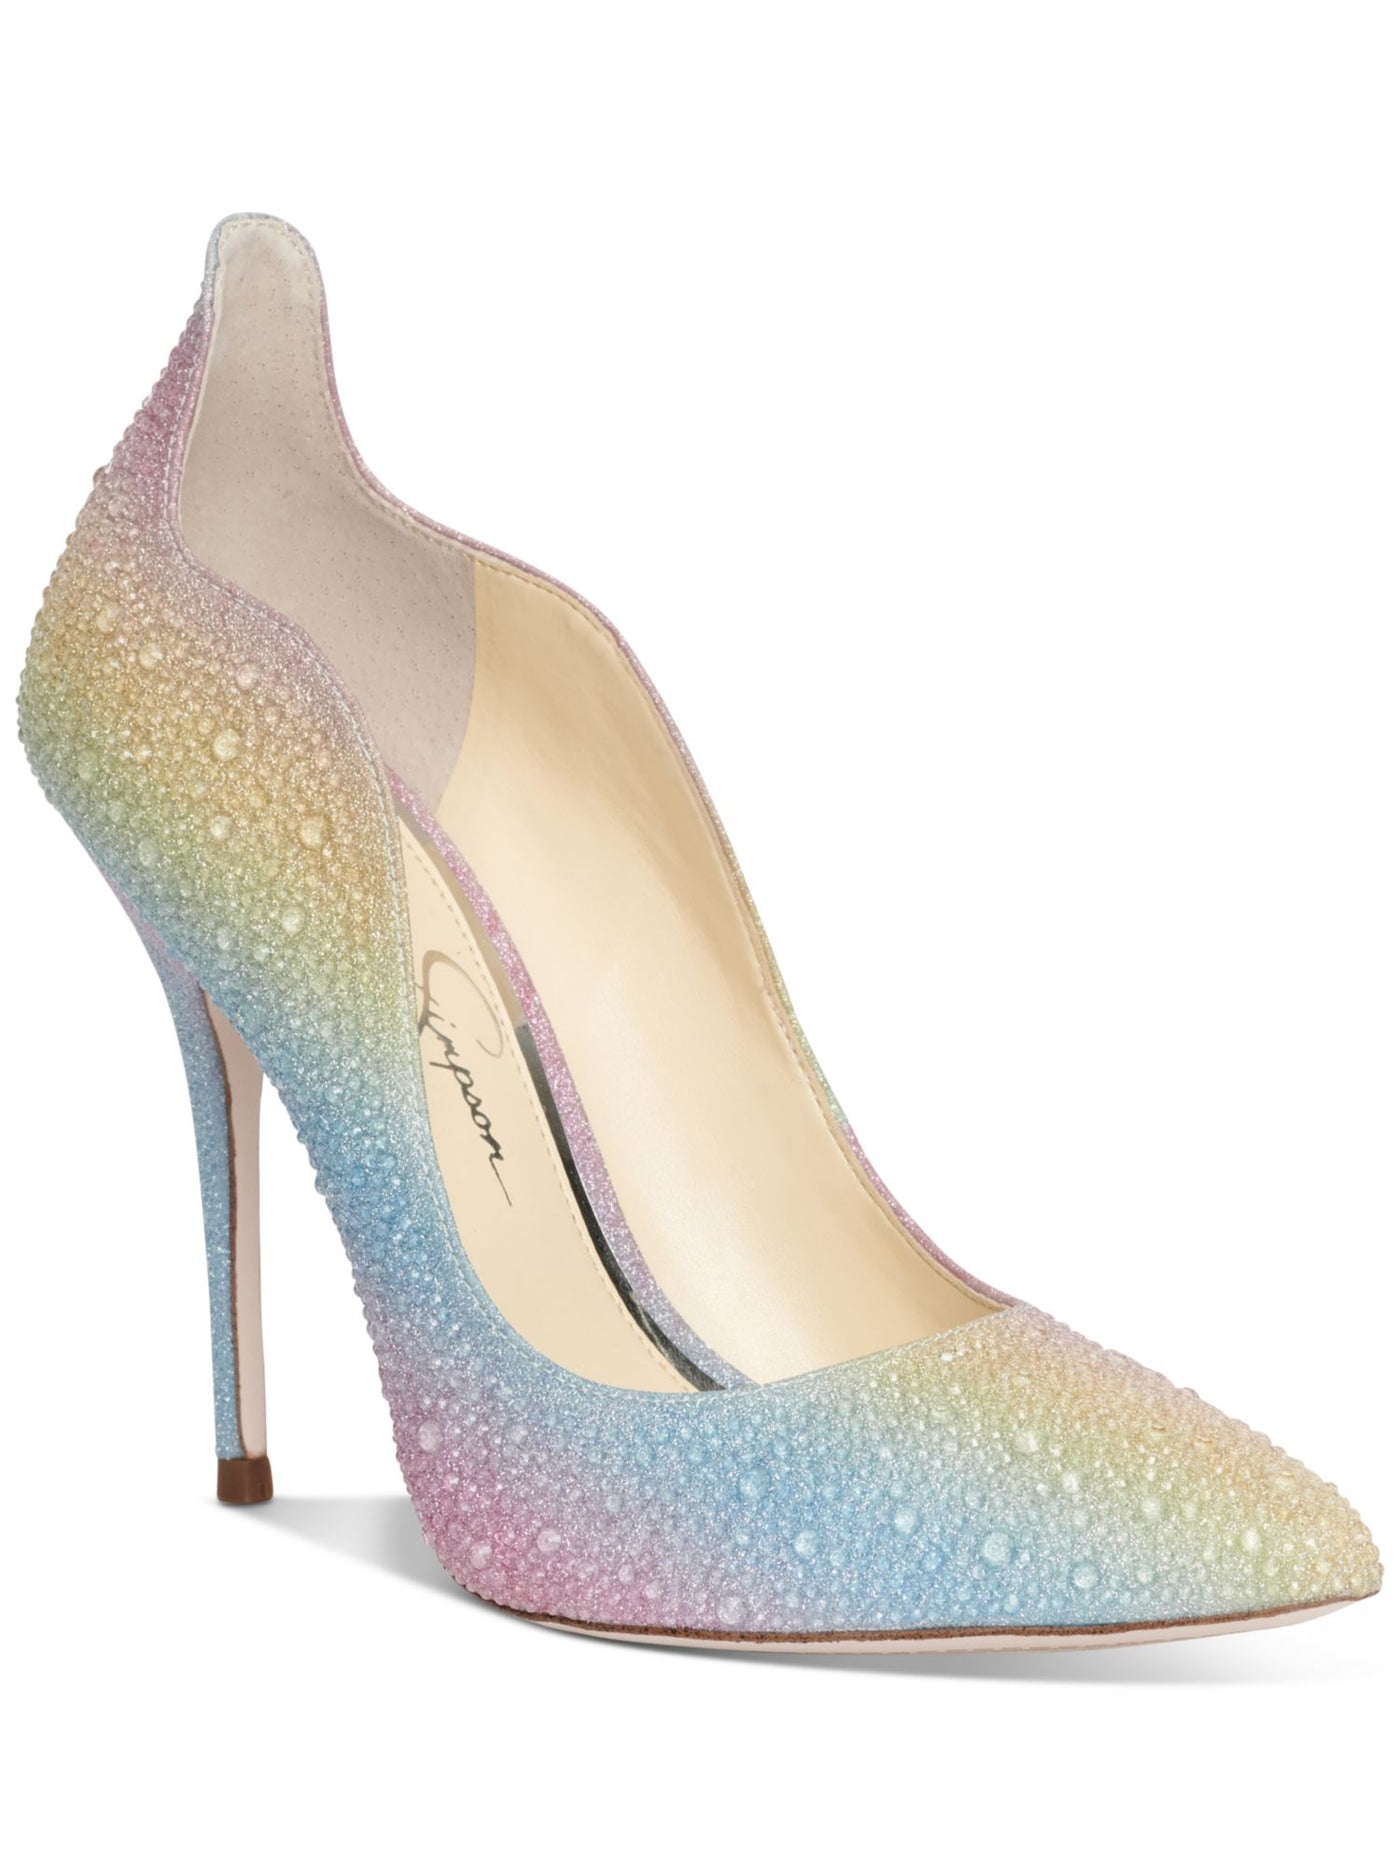 JESSICA SIMPSON Womens Rainbow Gradient Scalloped Rhinestone Padded Wayva Pointed Toe Stiletto Slip On Pumps Shoes 6.5 M